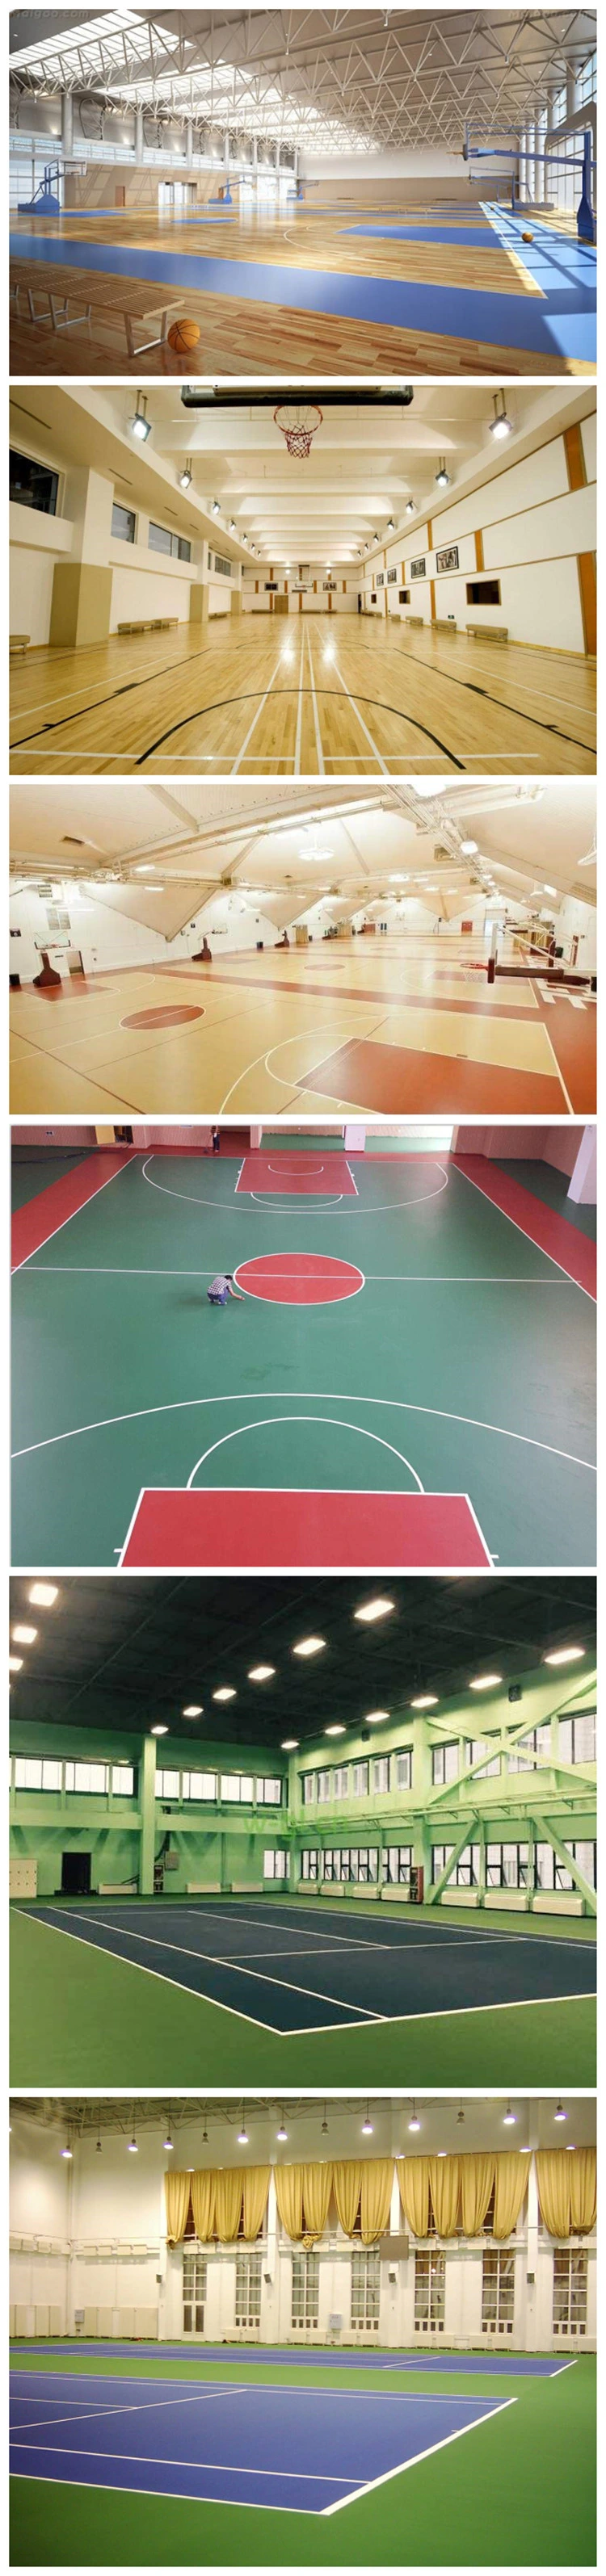 Indoor Basketball Vinyl Sports Carpet in Roll